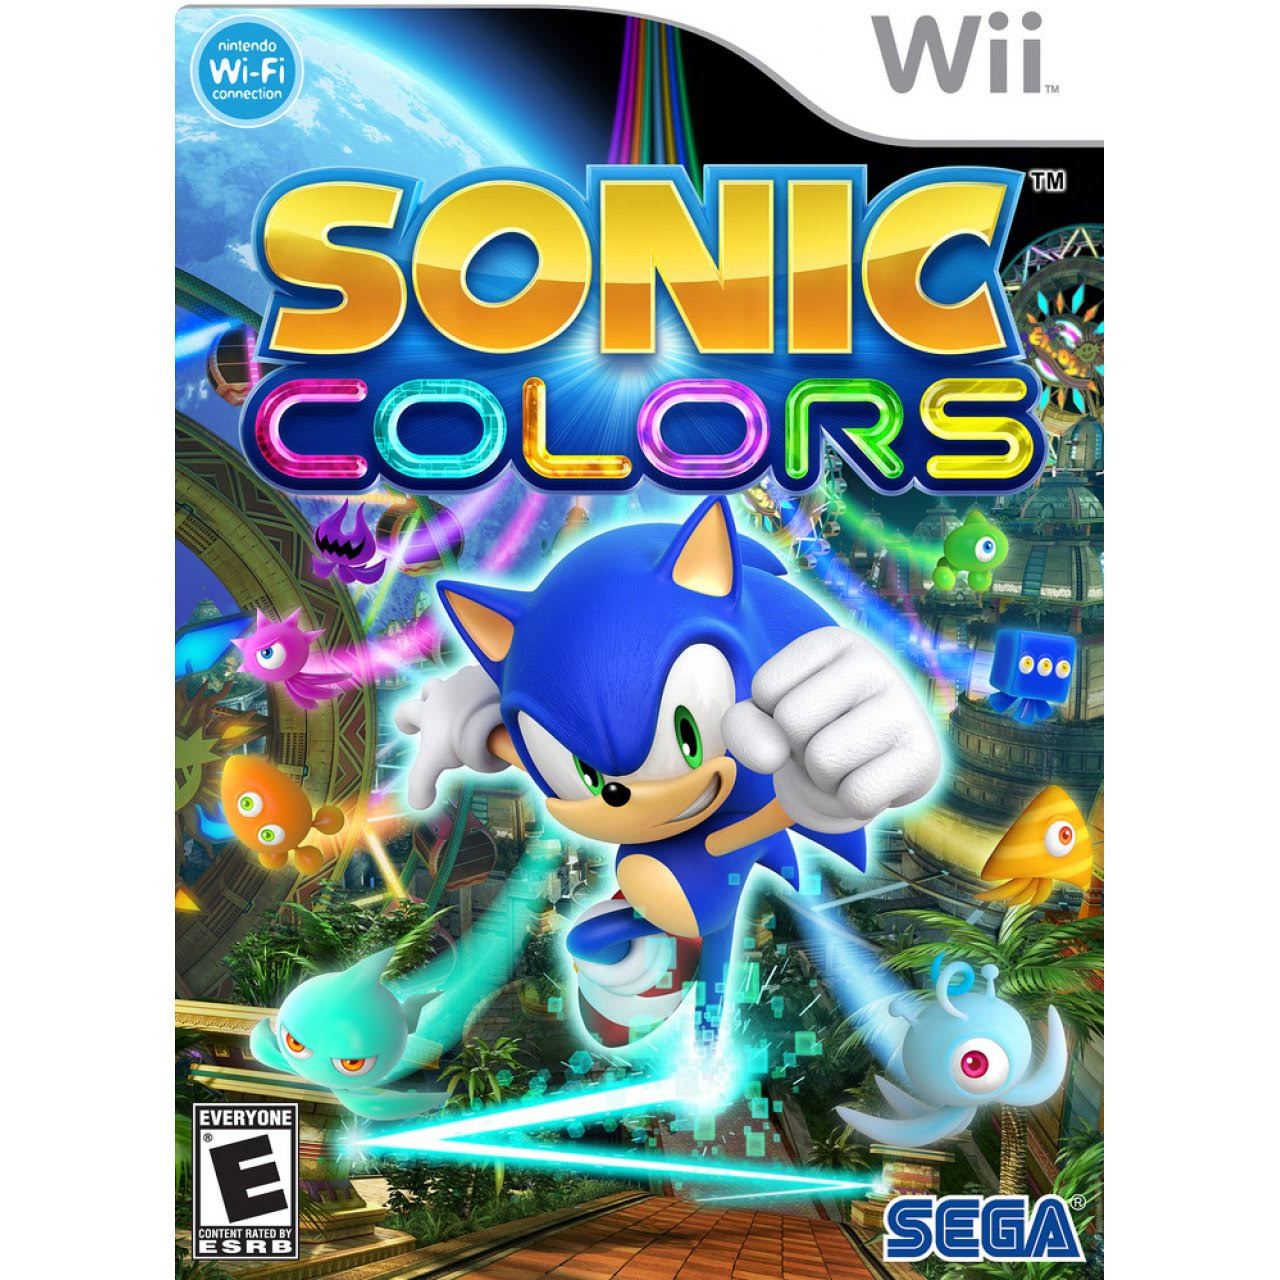 Sonic Colors - Nintendo Wii